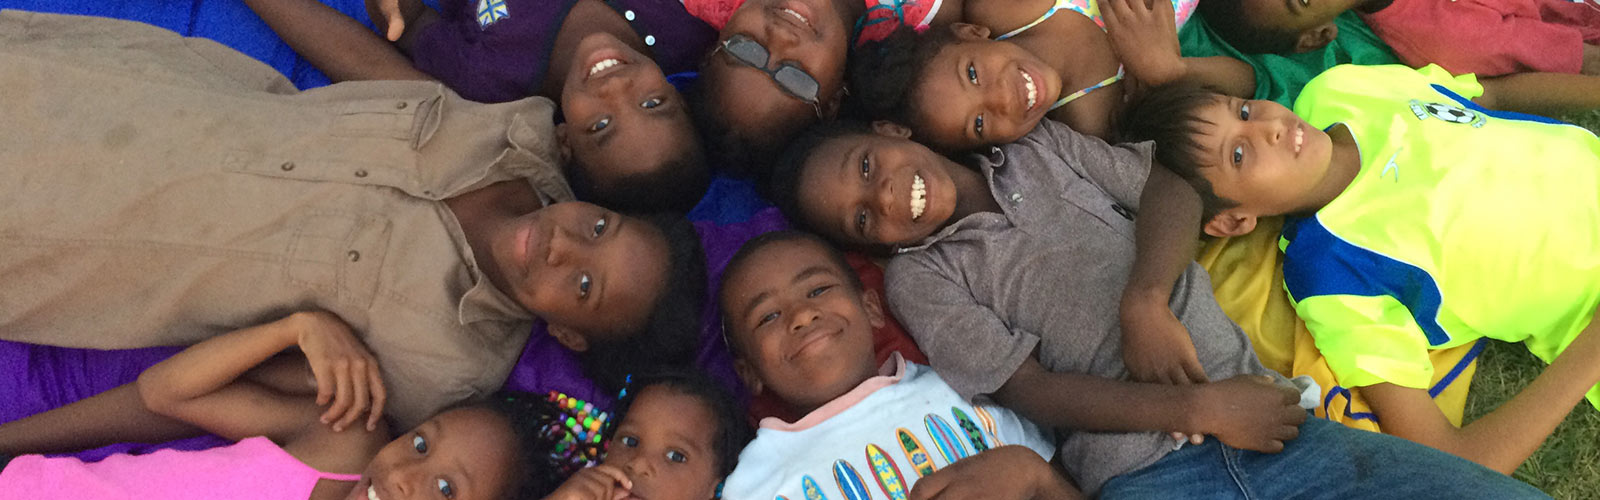 Belize Baha'i Children